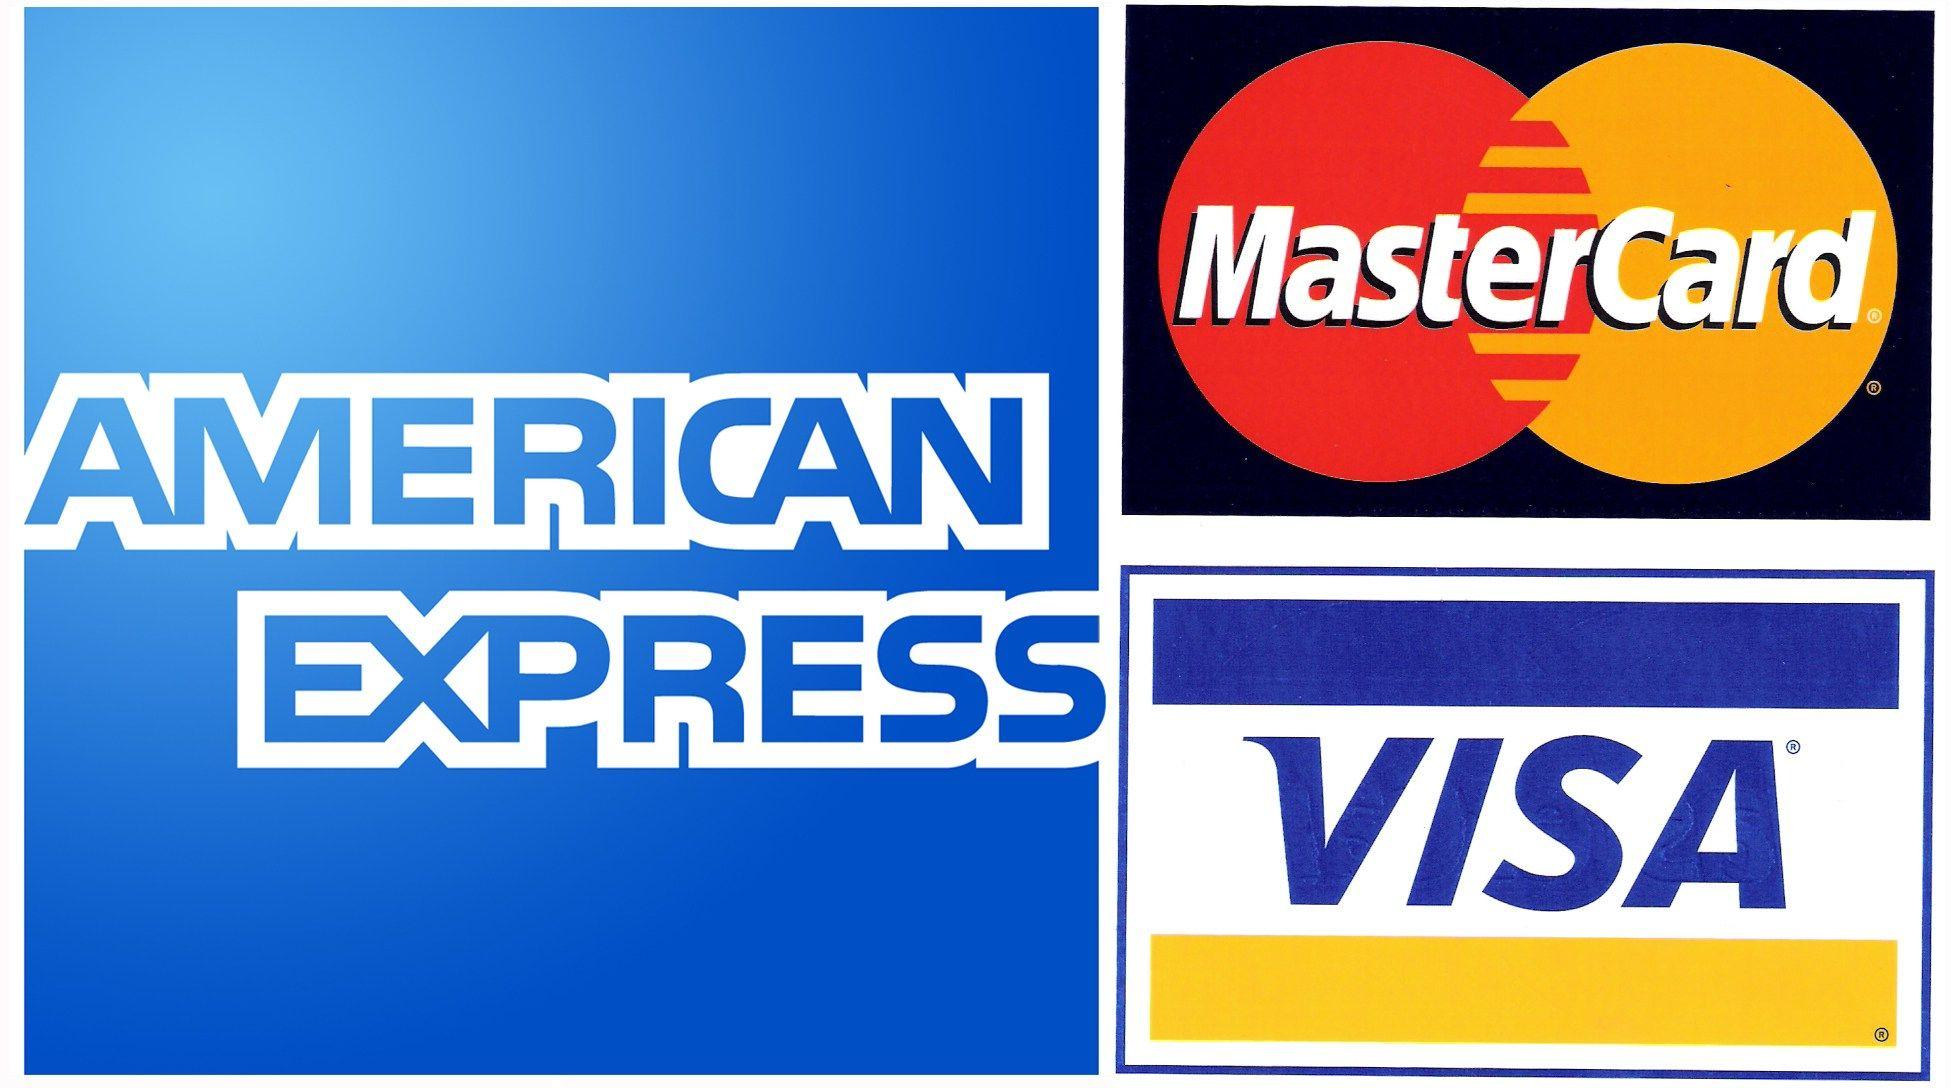 Printable Visa MasterCard Logo - Logo Mastercard Printable Visa